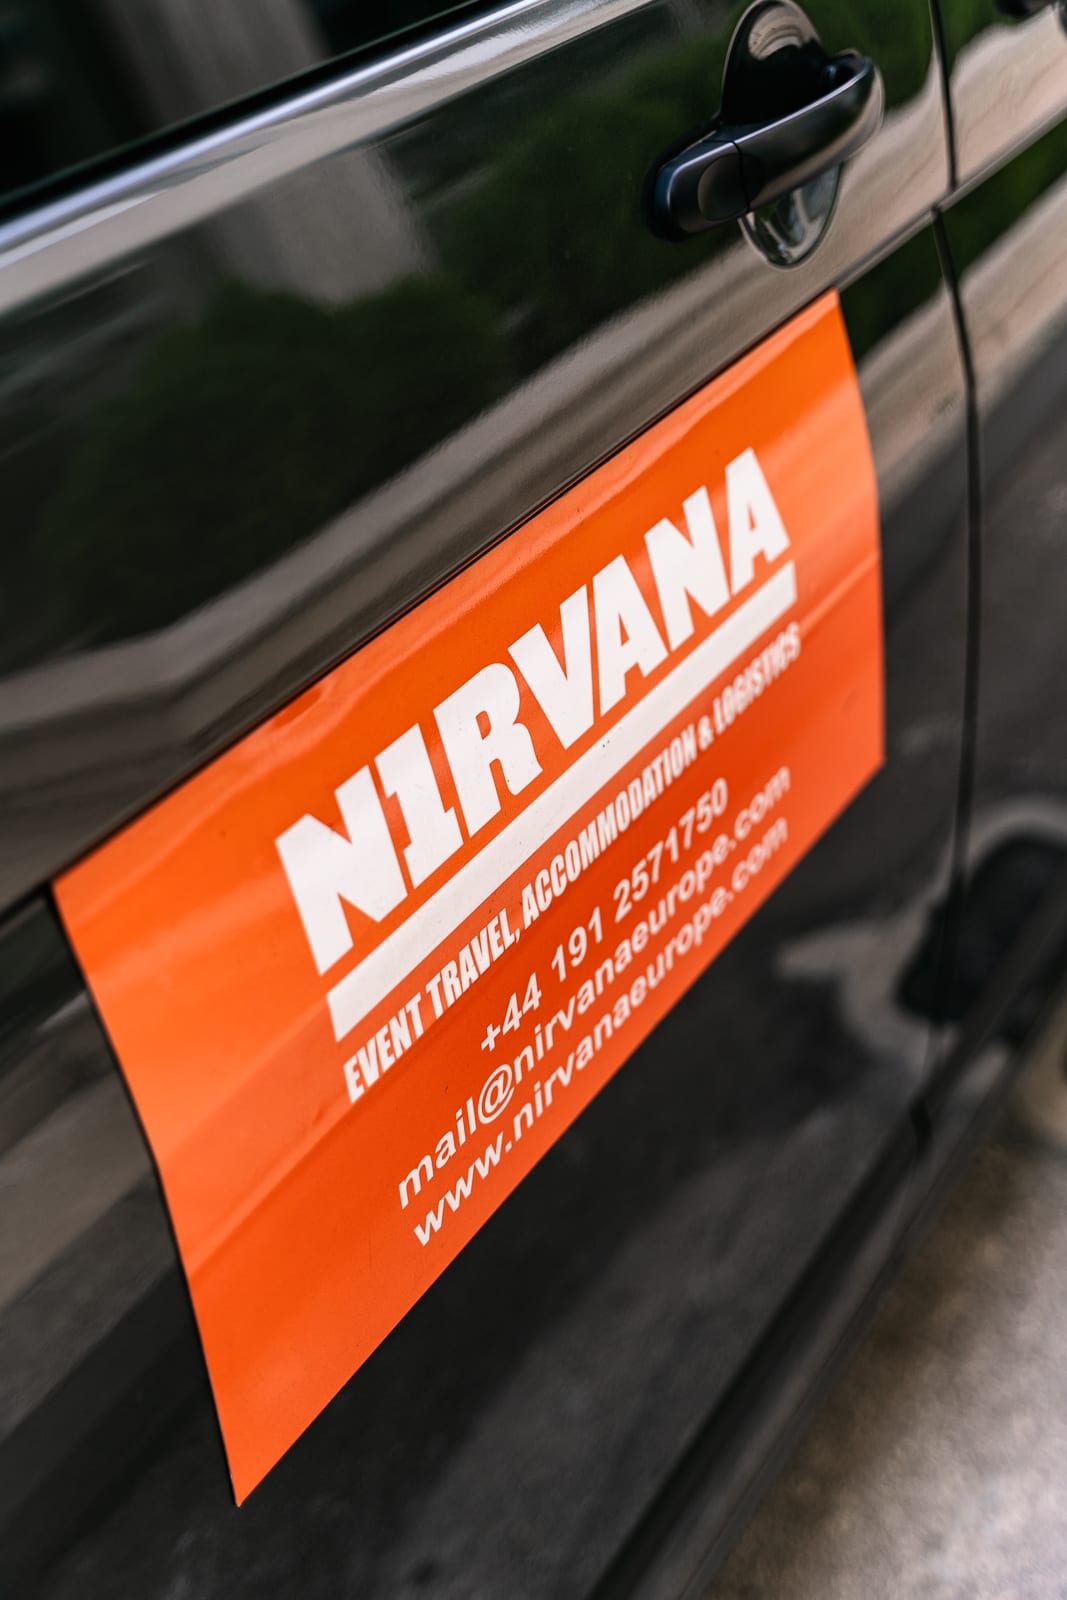 Nirvana - travel and accommodation partner